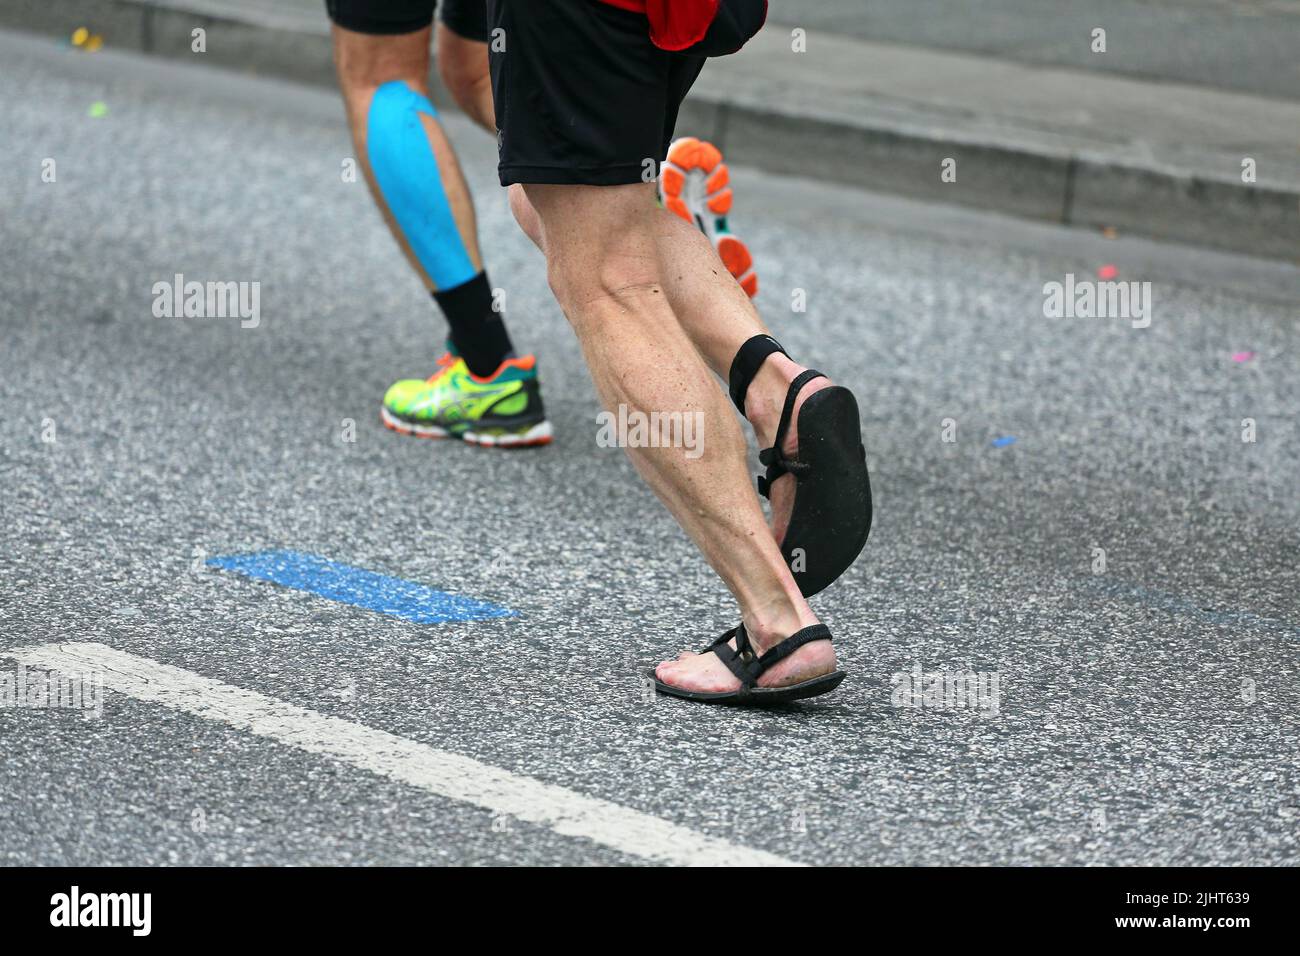 marathon runner in sandals on asphalt Stock Photo